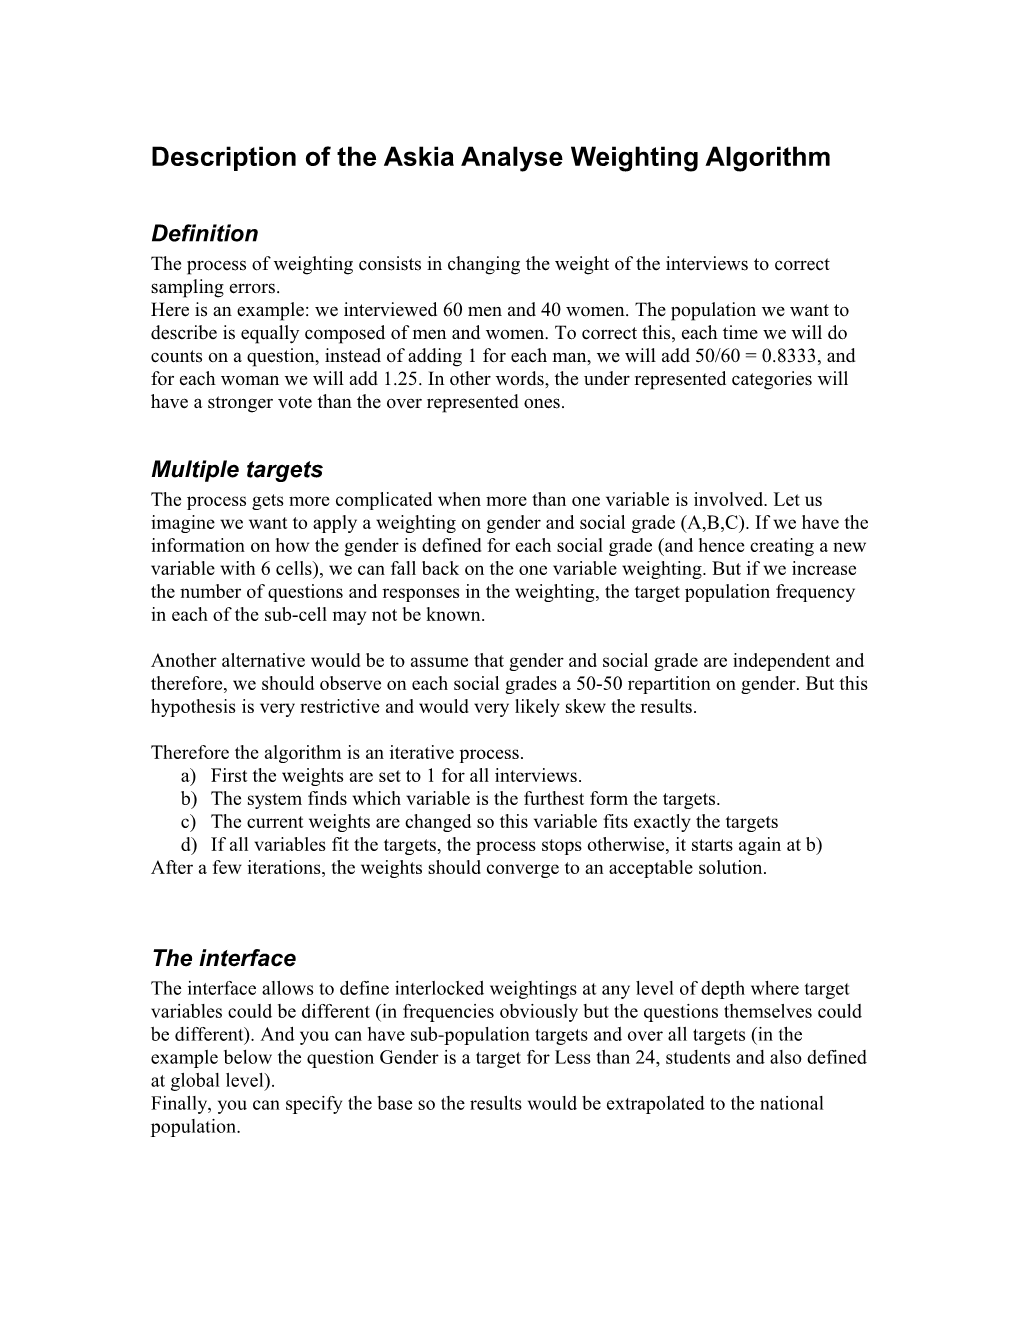 Description of the Askia Analyse Weighting Algorithm